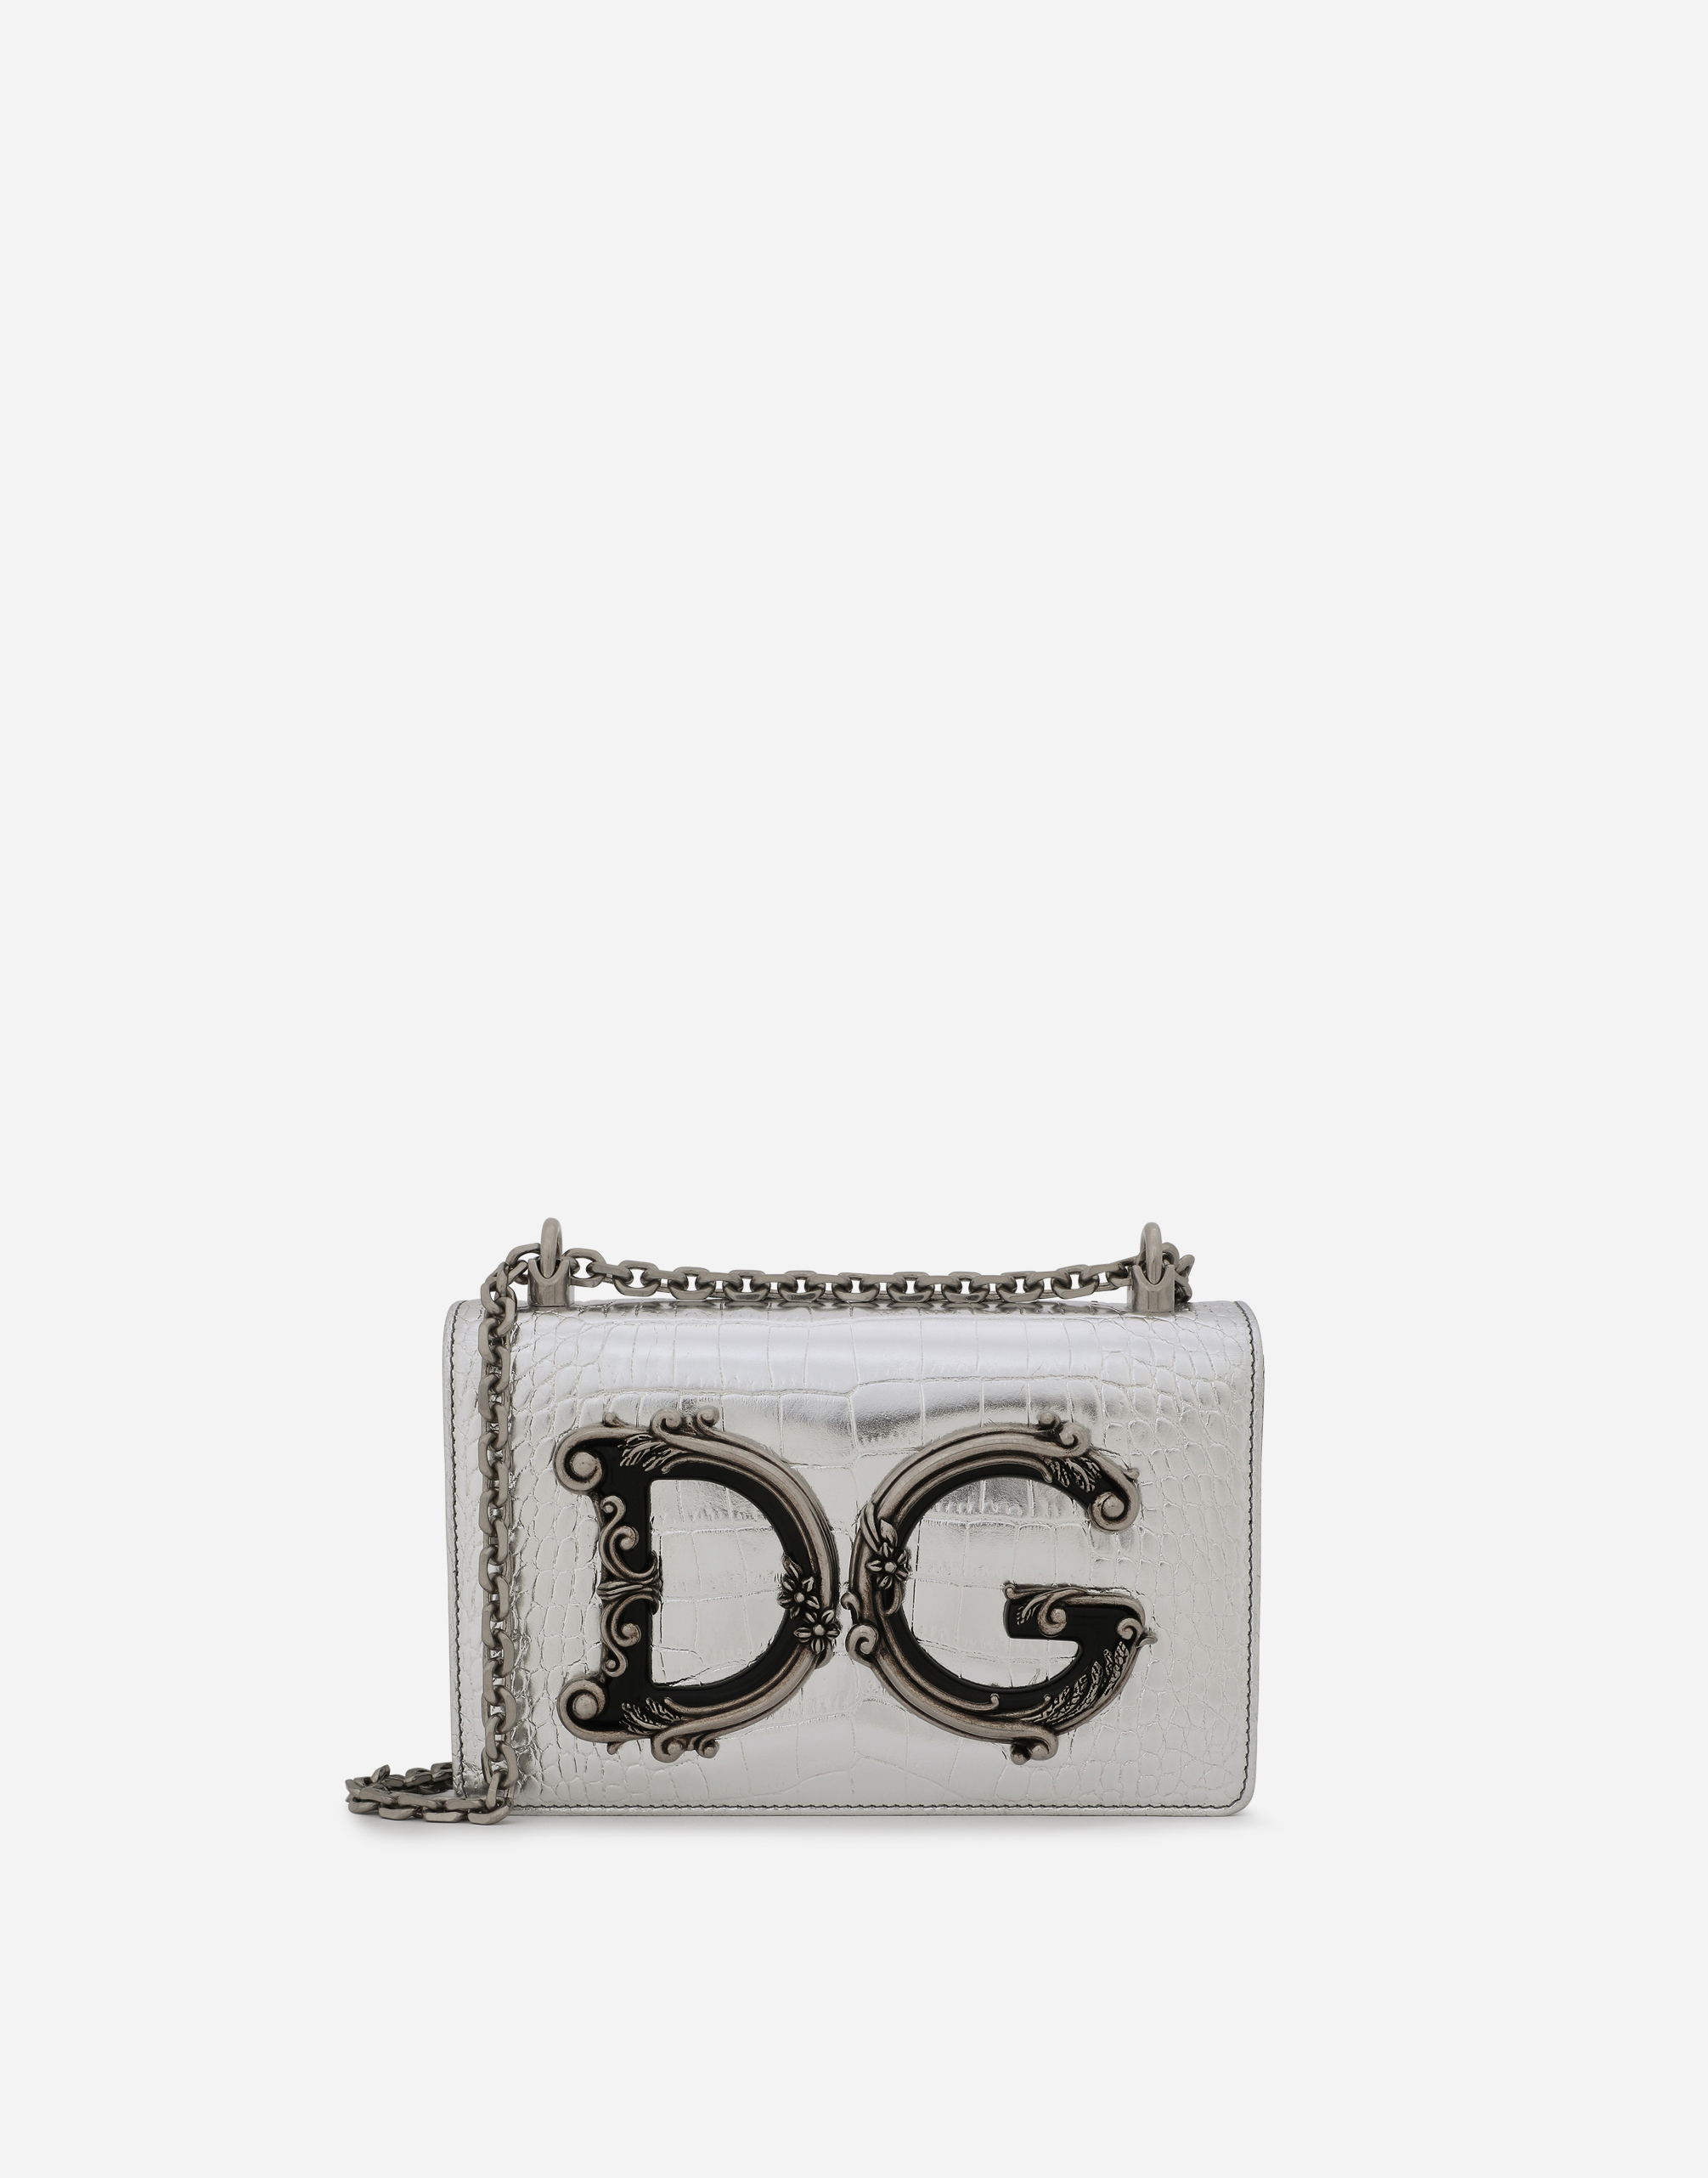 Foiled crocodile-print calfskin DG Girls bag in Silver